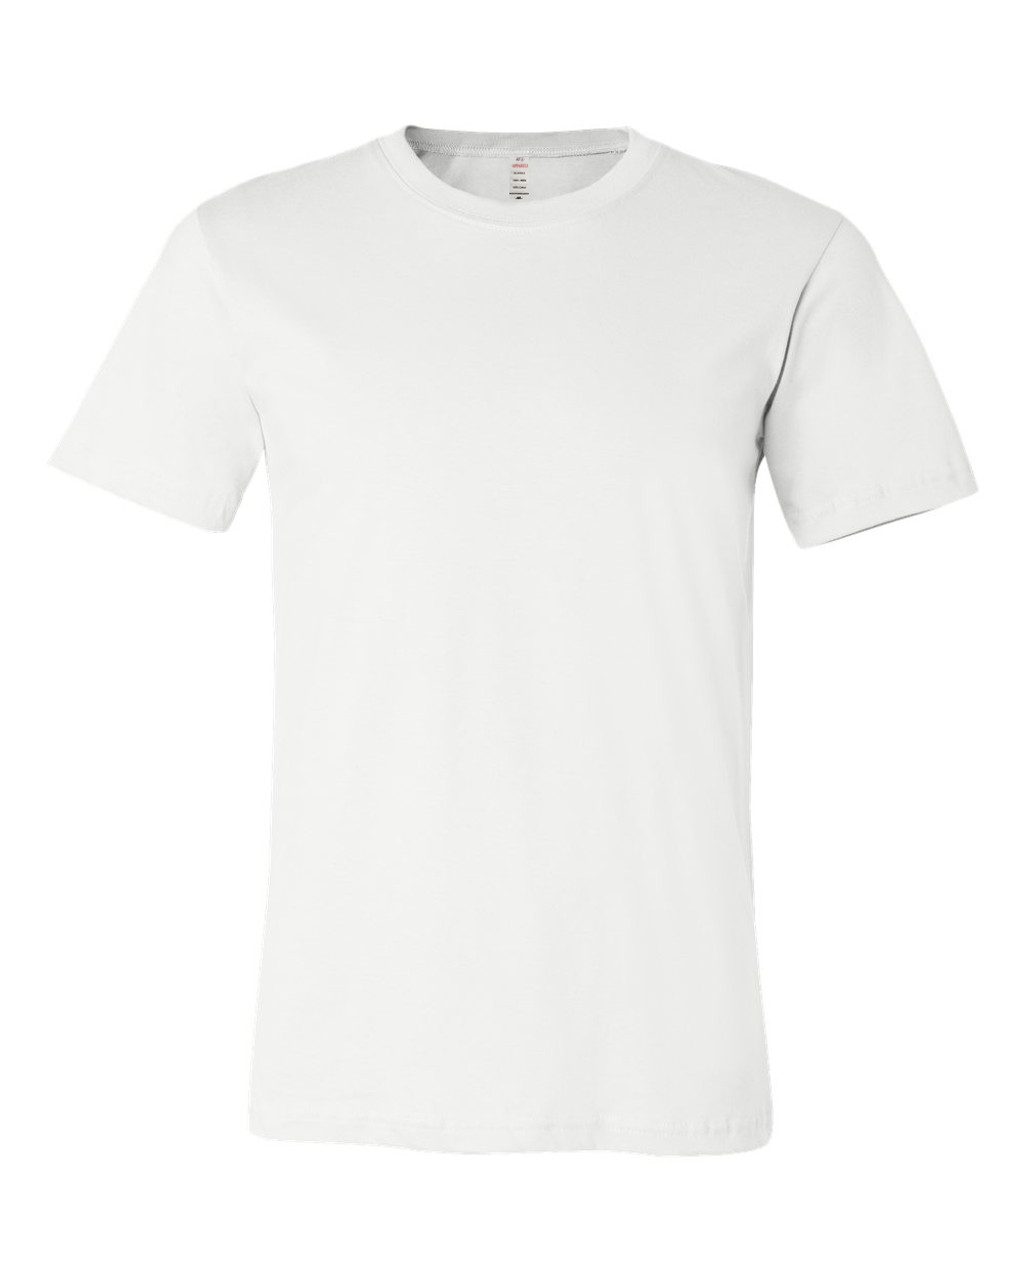 regeren Anesthesie hel AF Apparel 4.1 oz. 65% Polyester 35% Cotton Sublimation Ready T-shirts